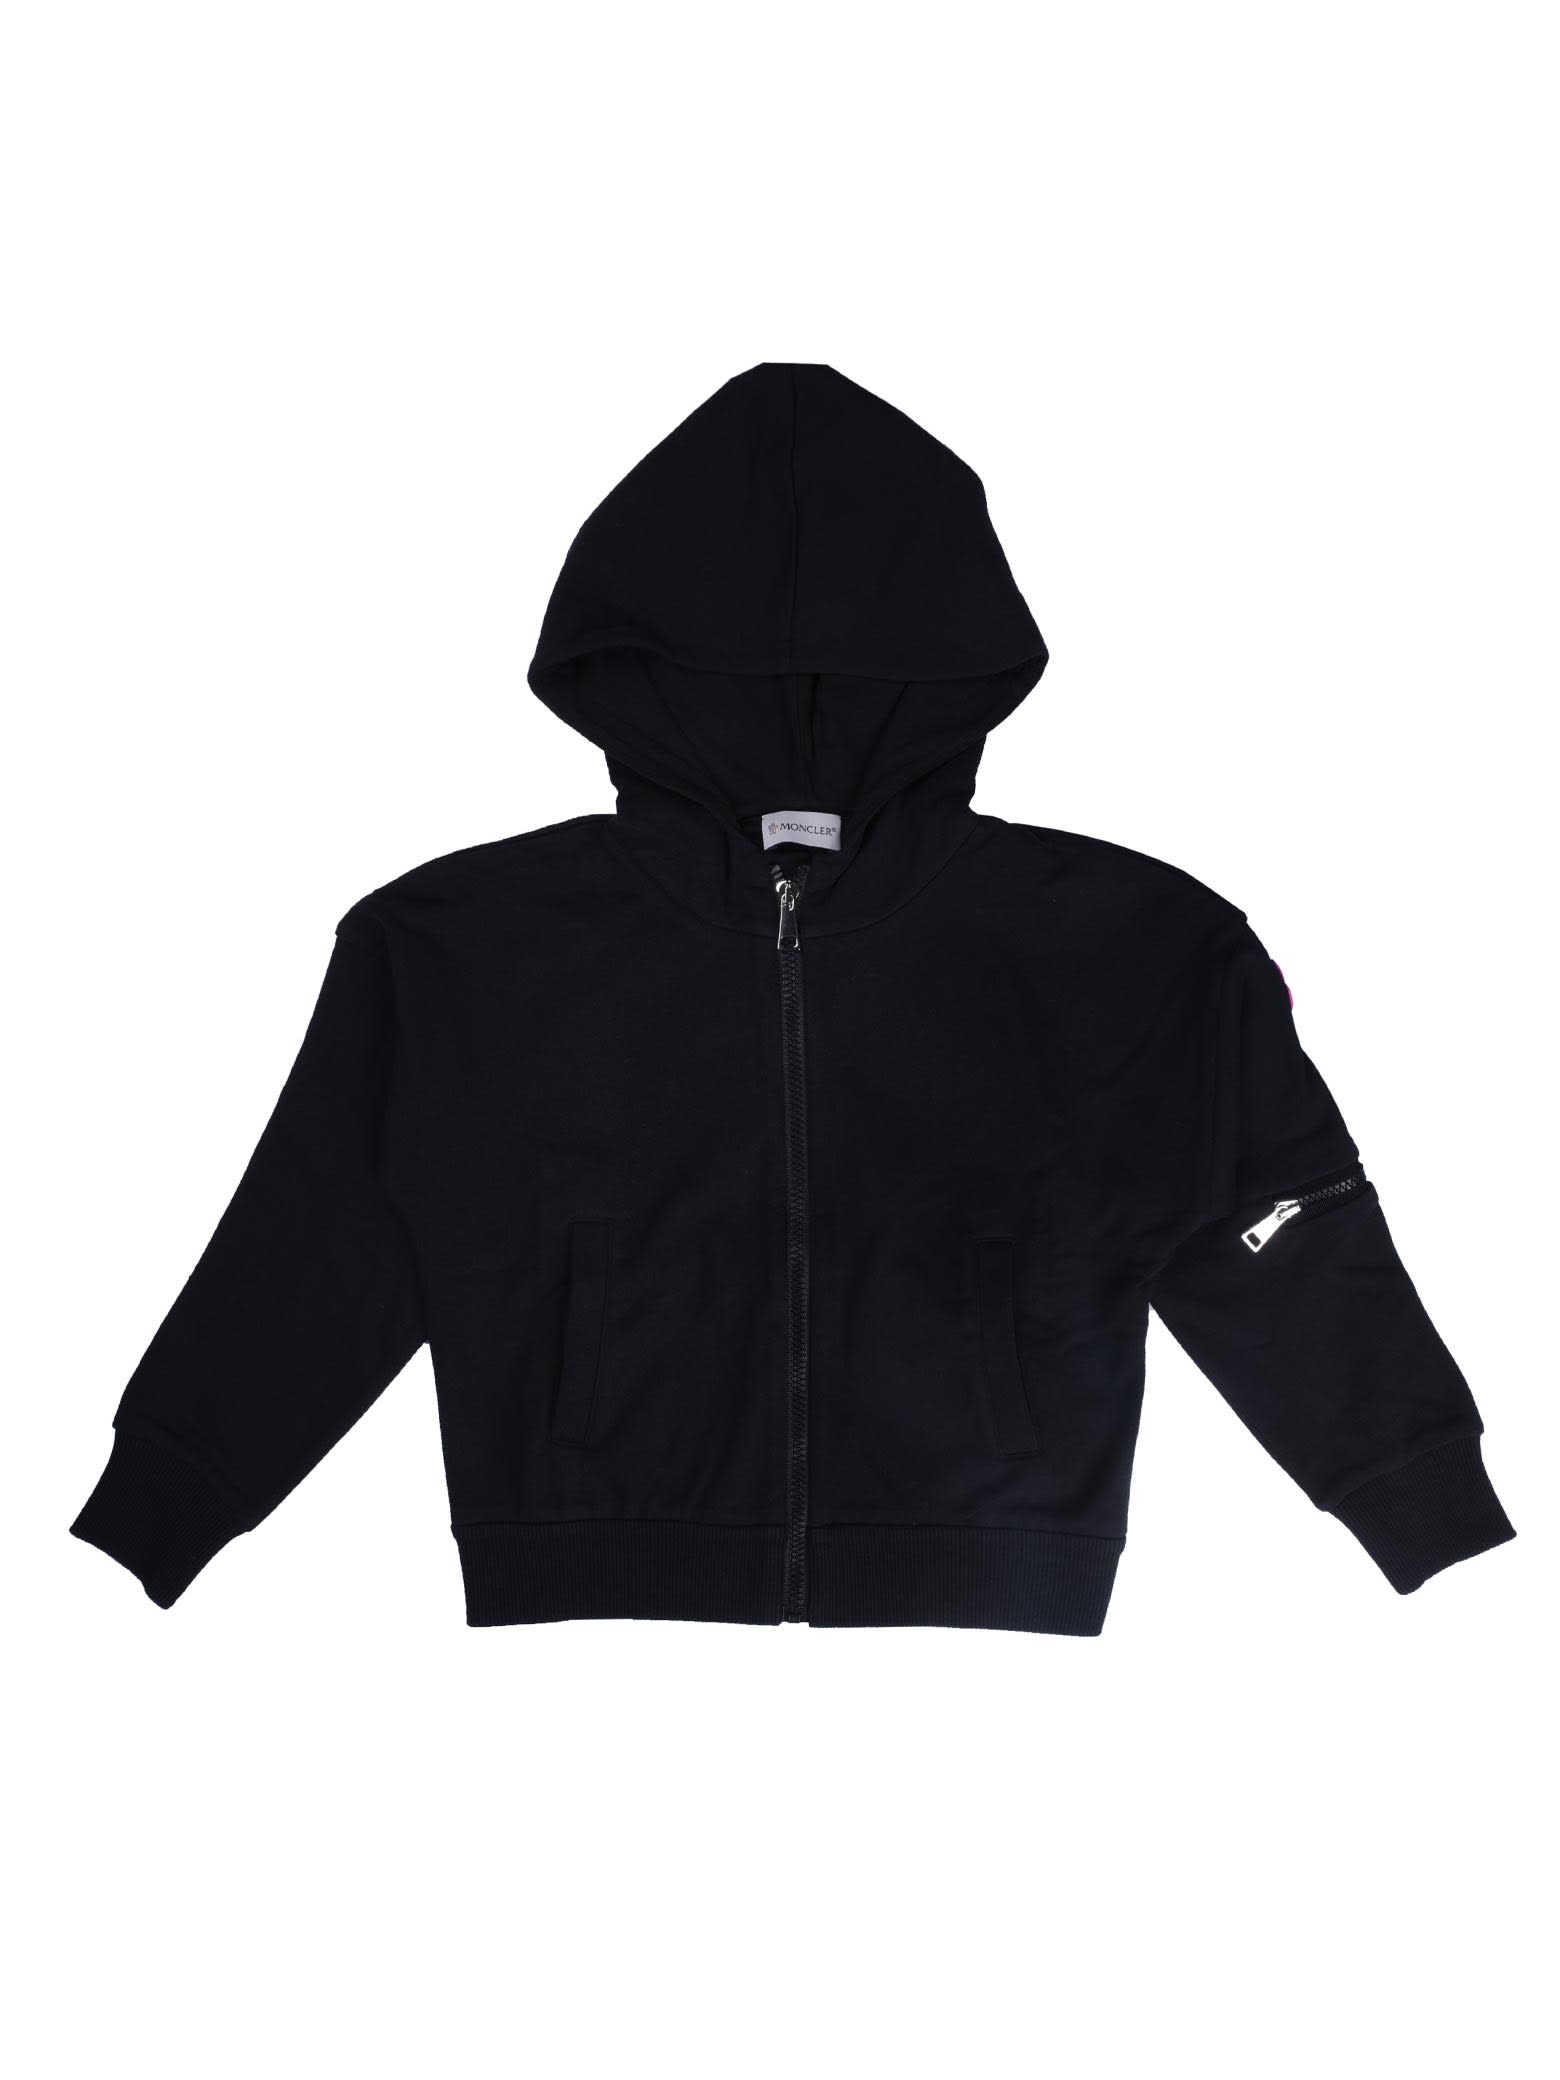 Moncler Black Full Zip Sweatshirt With Hood